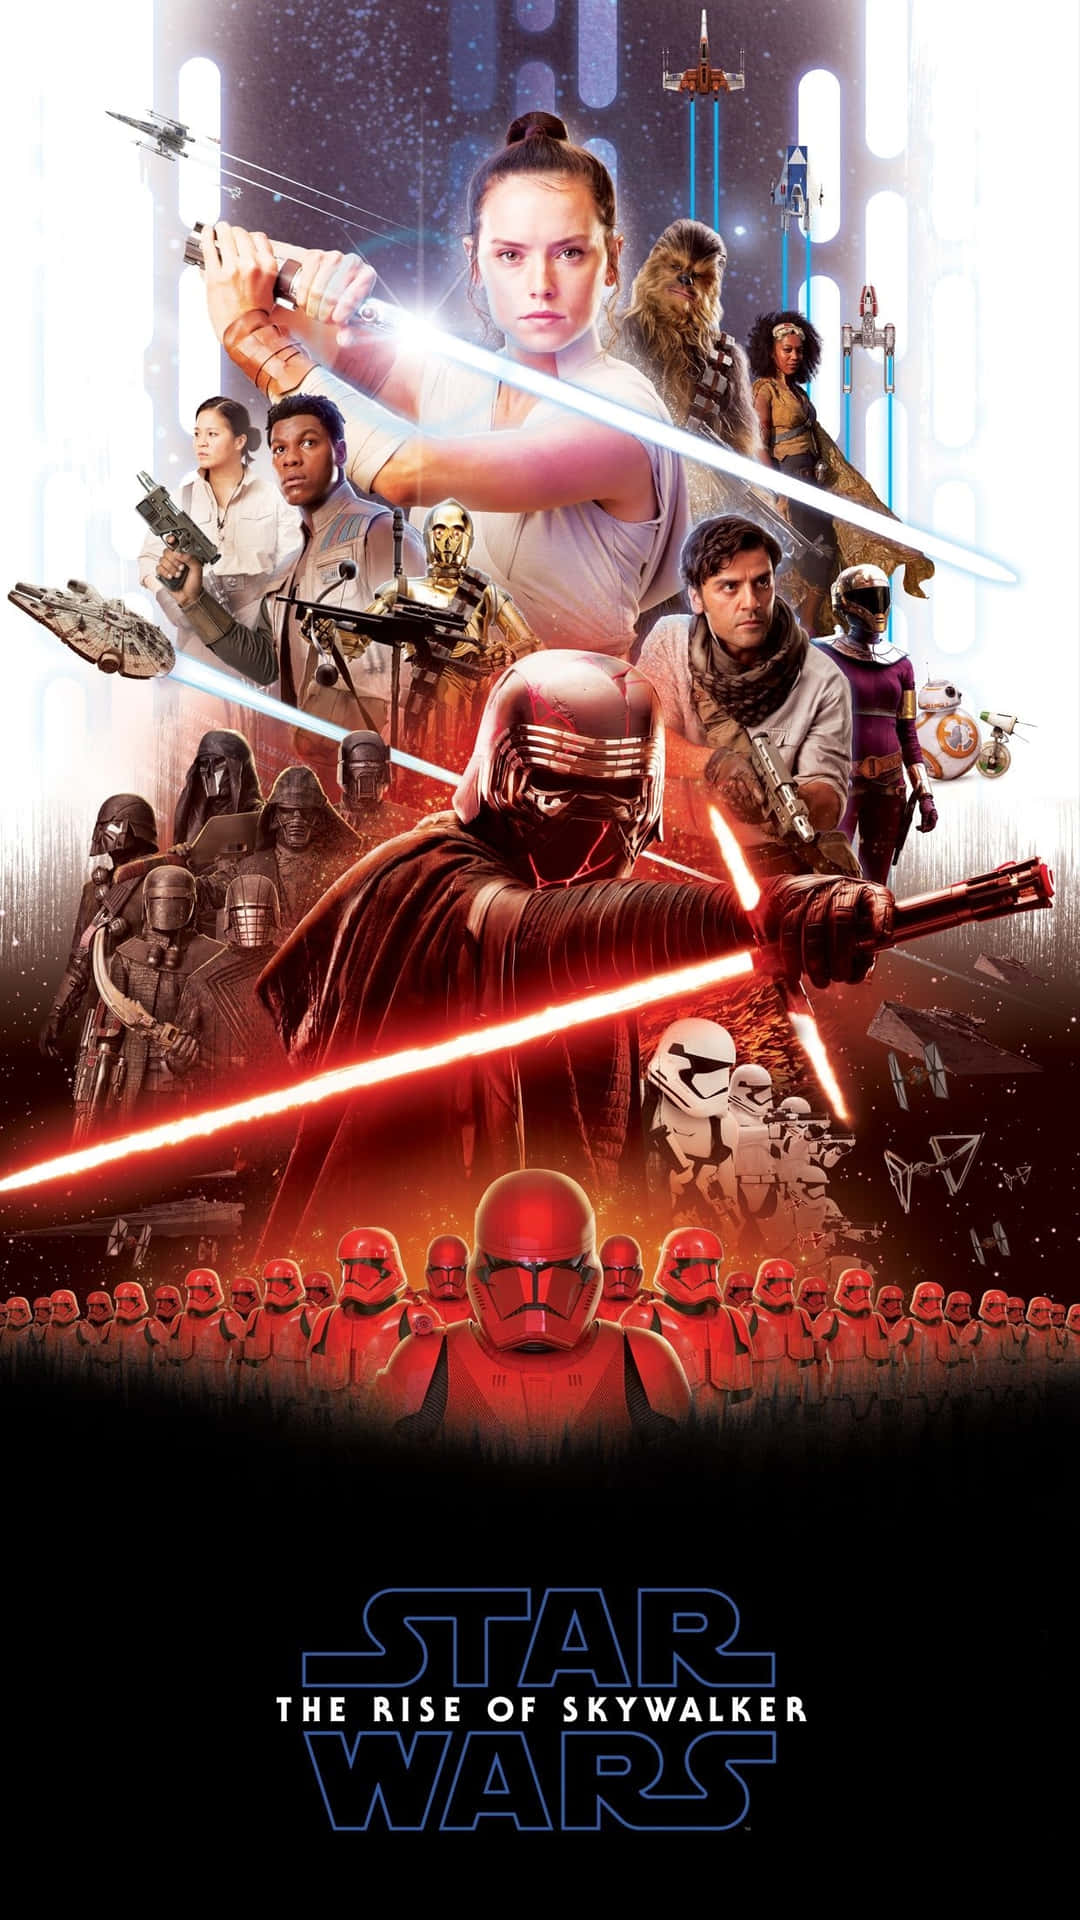 Star Wars Characters Portrait Poster Wallpaper